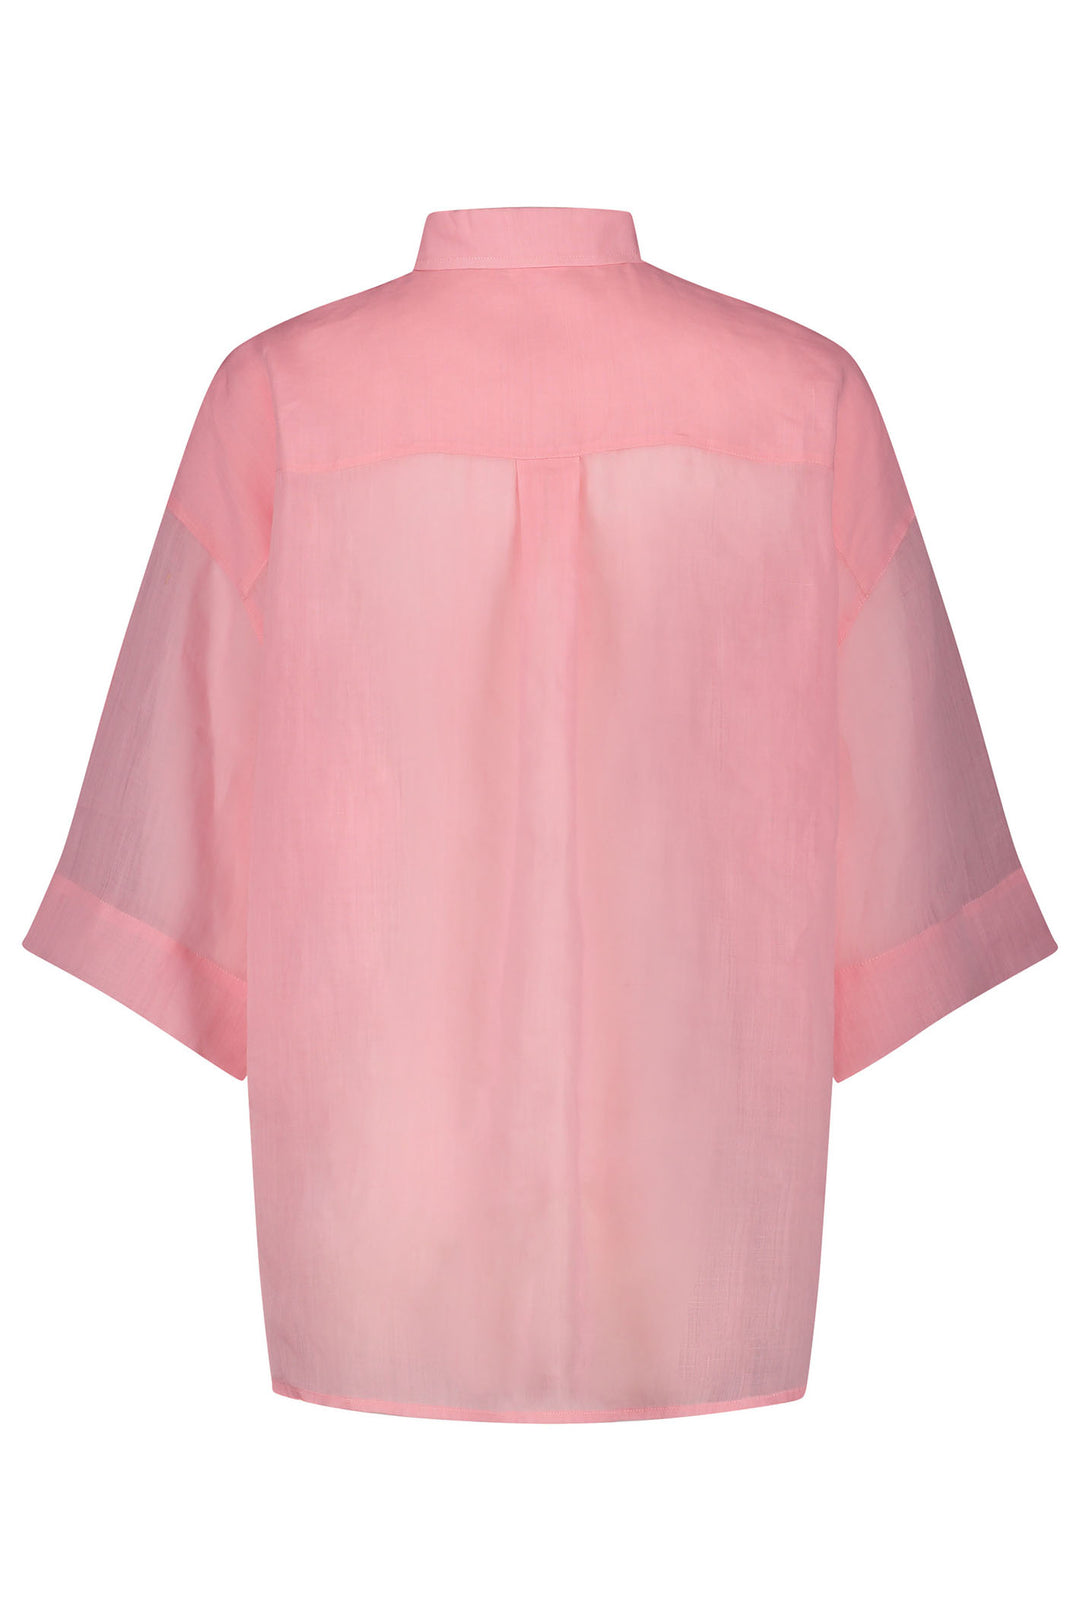 Gerry Weber 360042 Milkshake Pink Short Sleeve Shirt - Experience Boutique